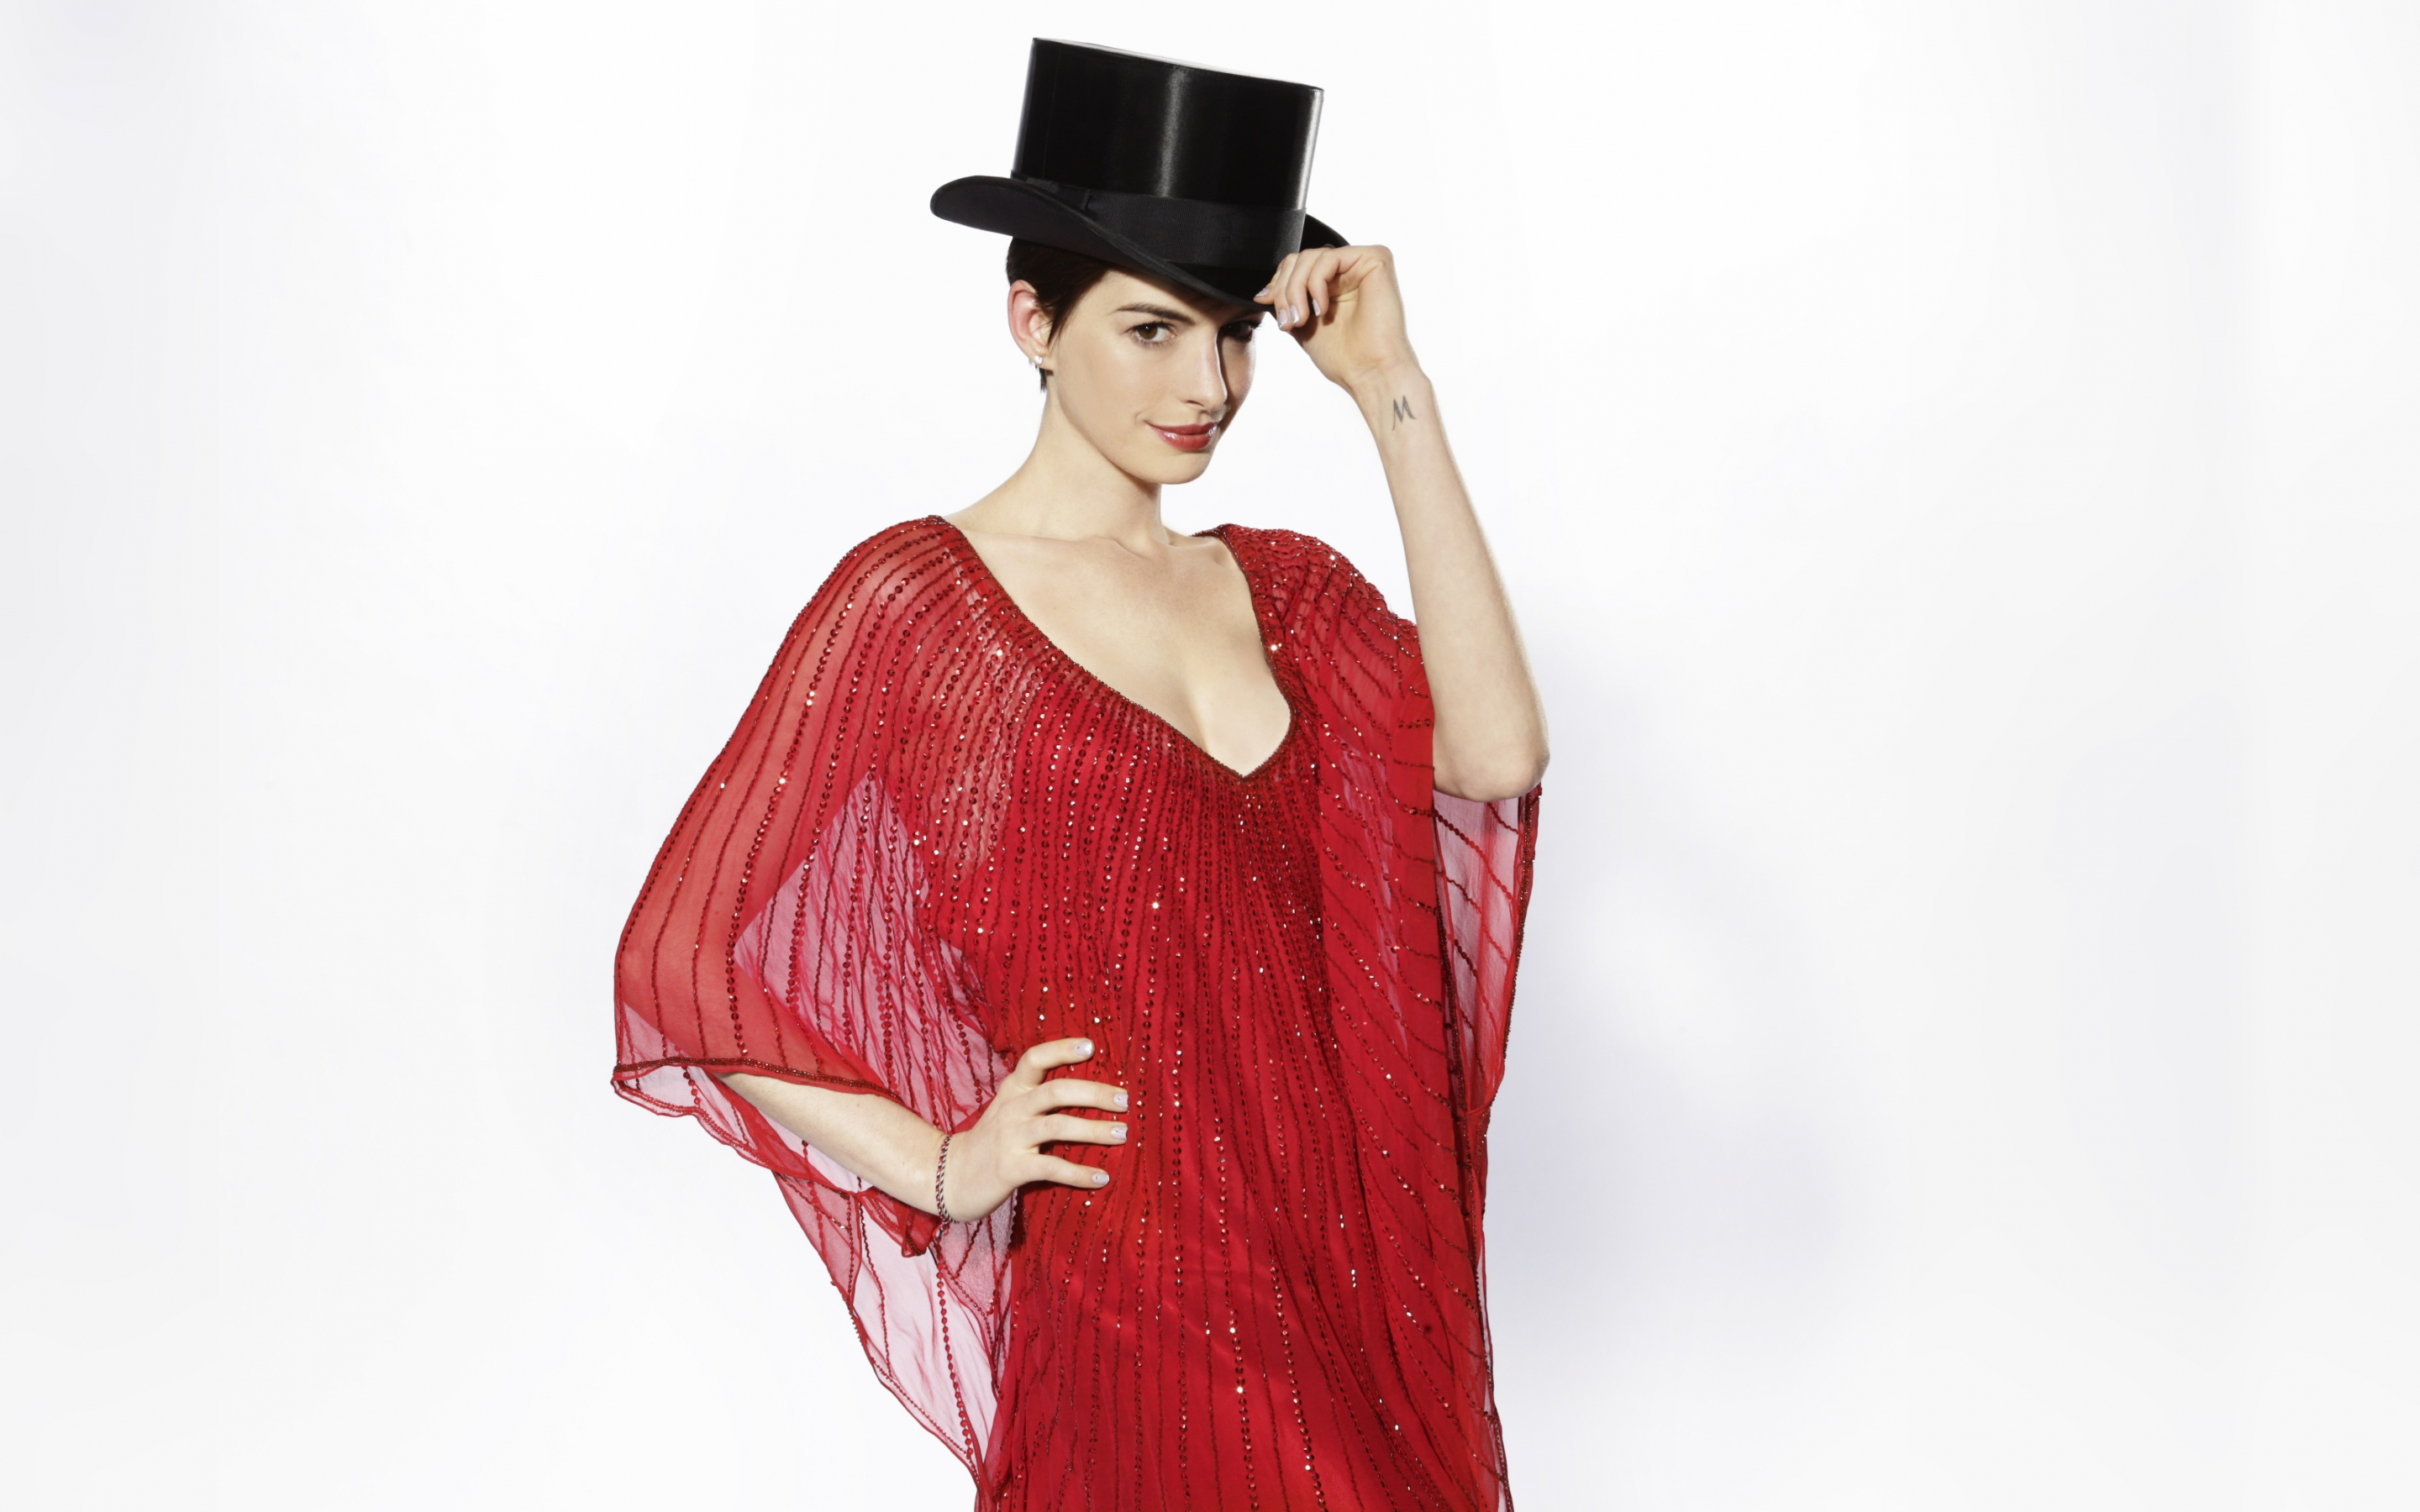 Black hat, Anne Hathaway, red dress, 2880x1800 wallpaper